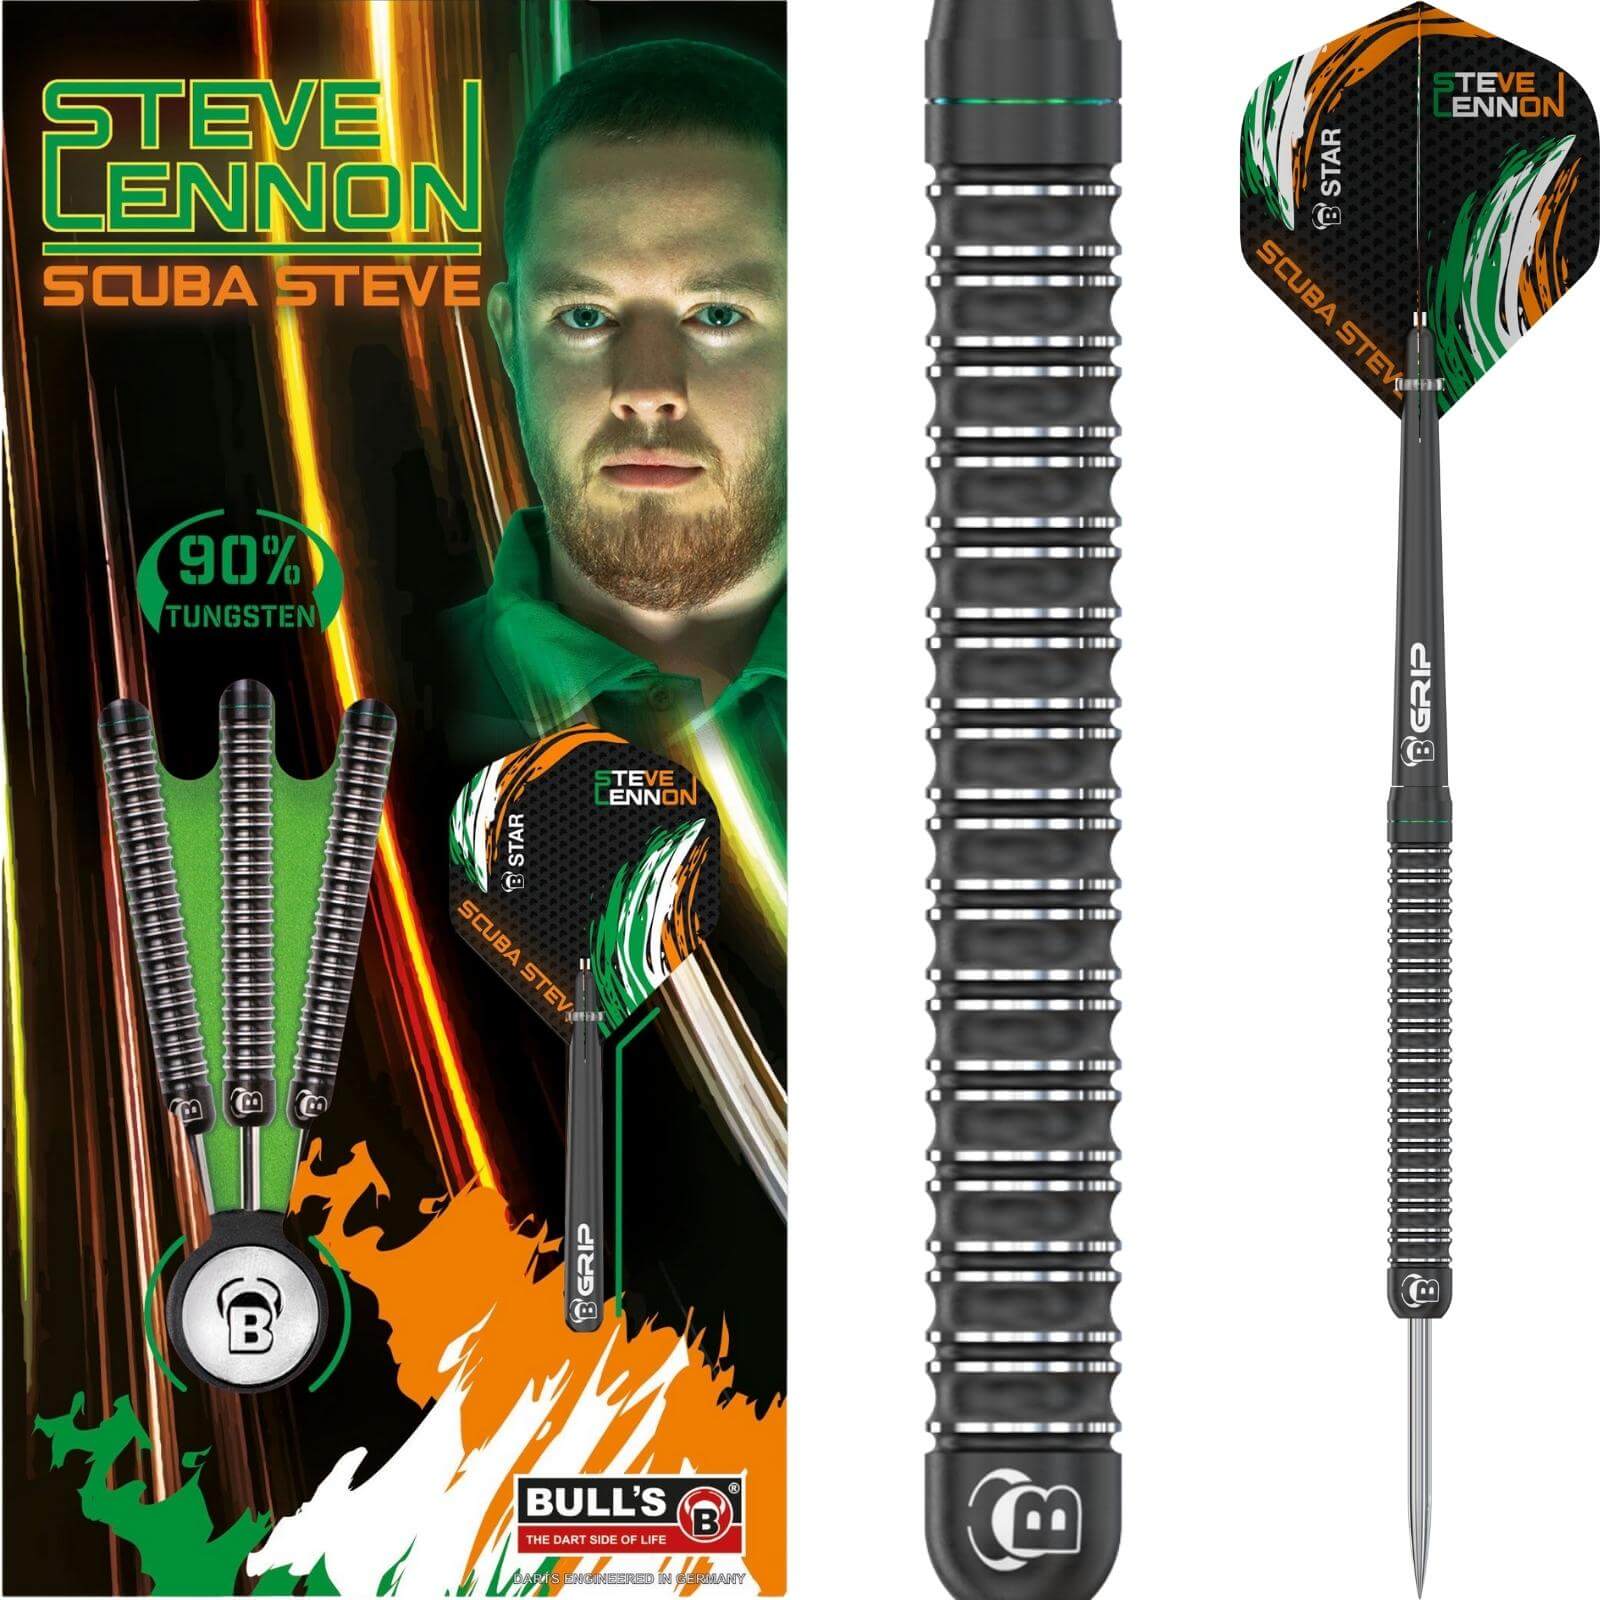 Darts - BULL'S - Steve Lennon Darts - Steel Tip - 90% Tungsten - 22g 24g 